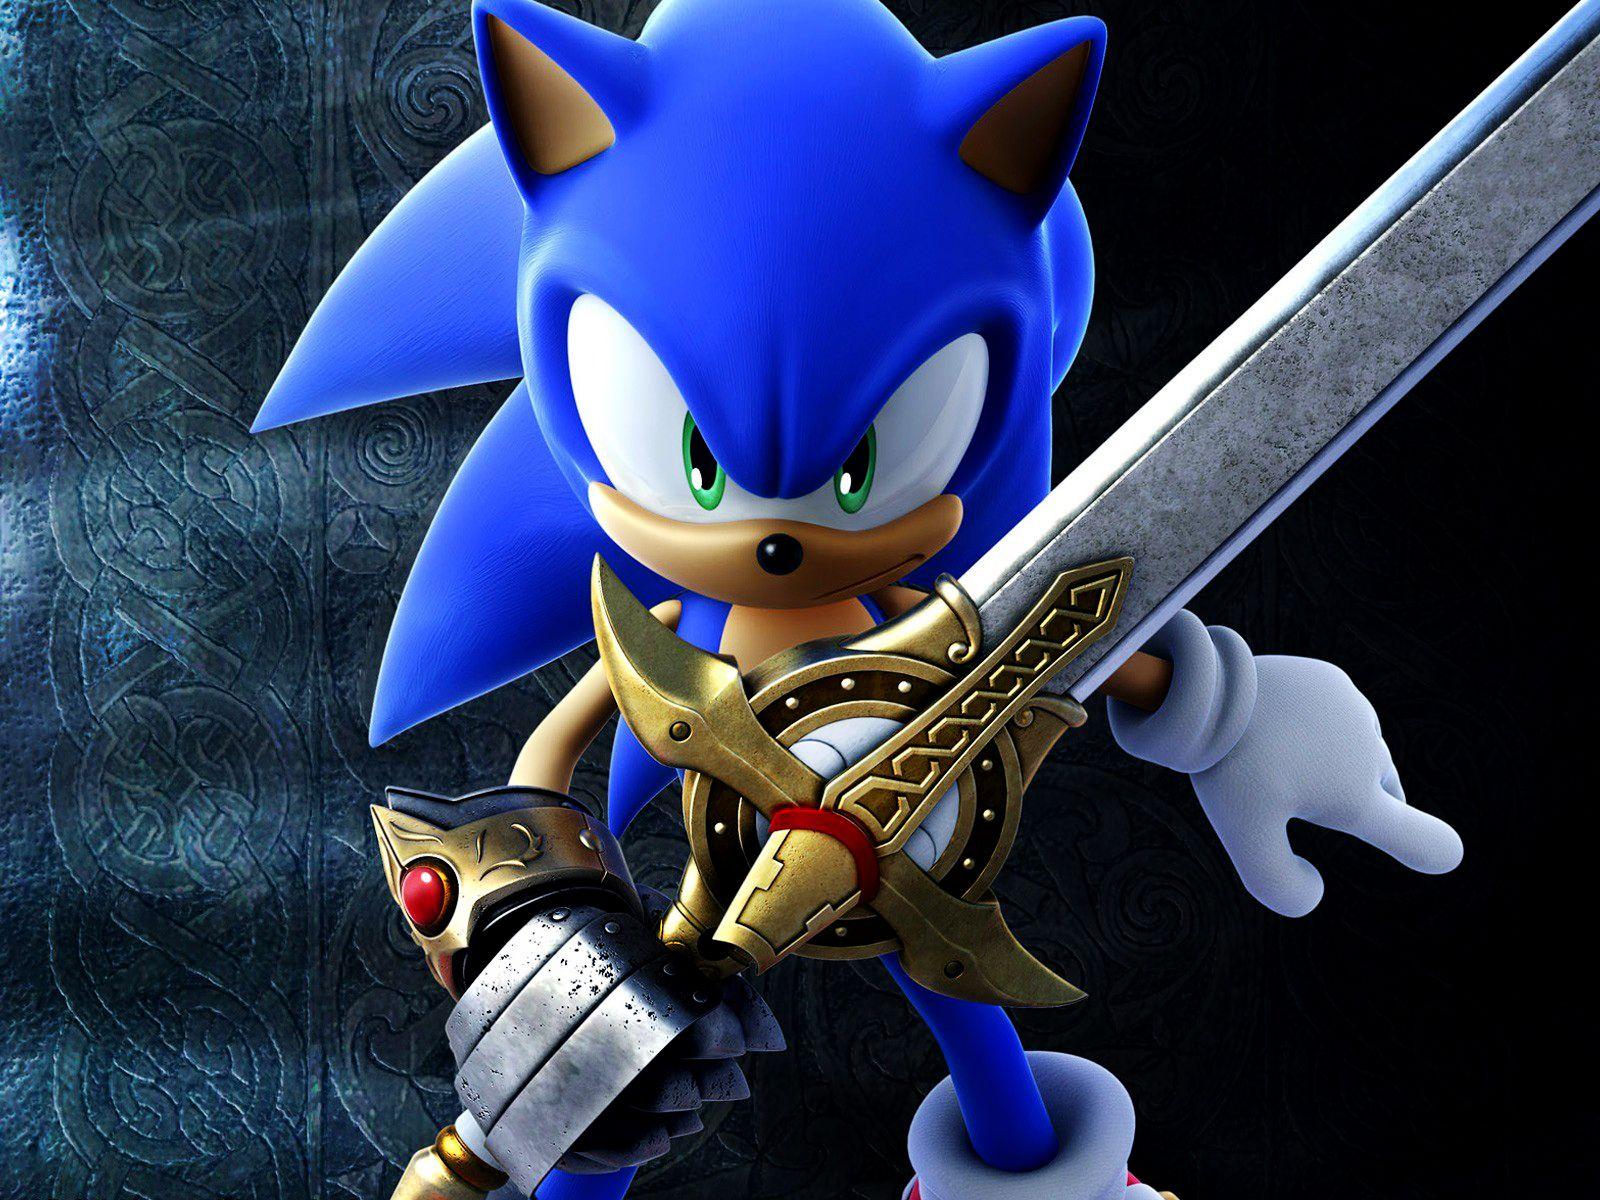 idiot dollar: Sonic The Dark Knight 3D Wallpaper Hight Quality. Sonic, Sonic the hedgehog, Hedgehog